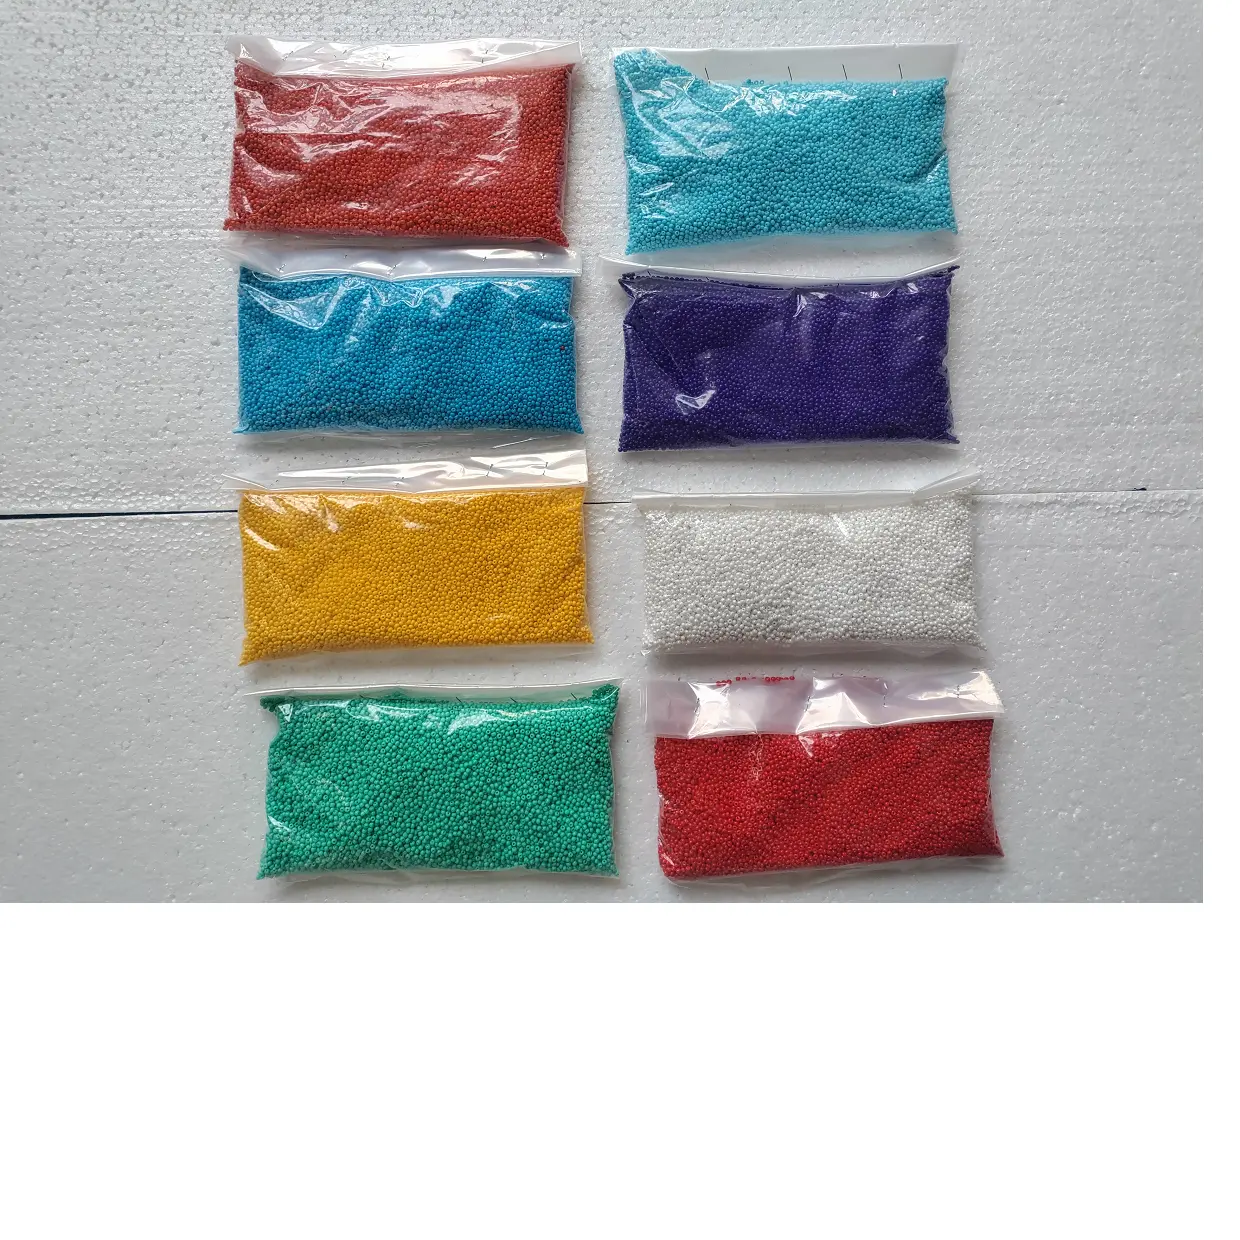 Manik-manik biji kaca dalam ukuran 9/0 tersedia dalam berbagai macam warna yang dikemas dalam 250 gram per warna ideal untuk dijual kembali